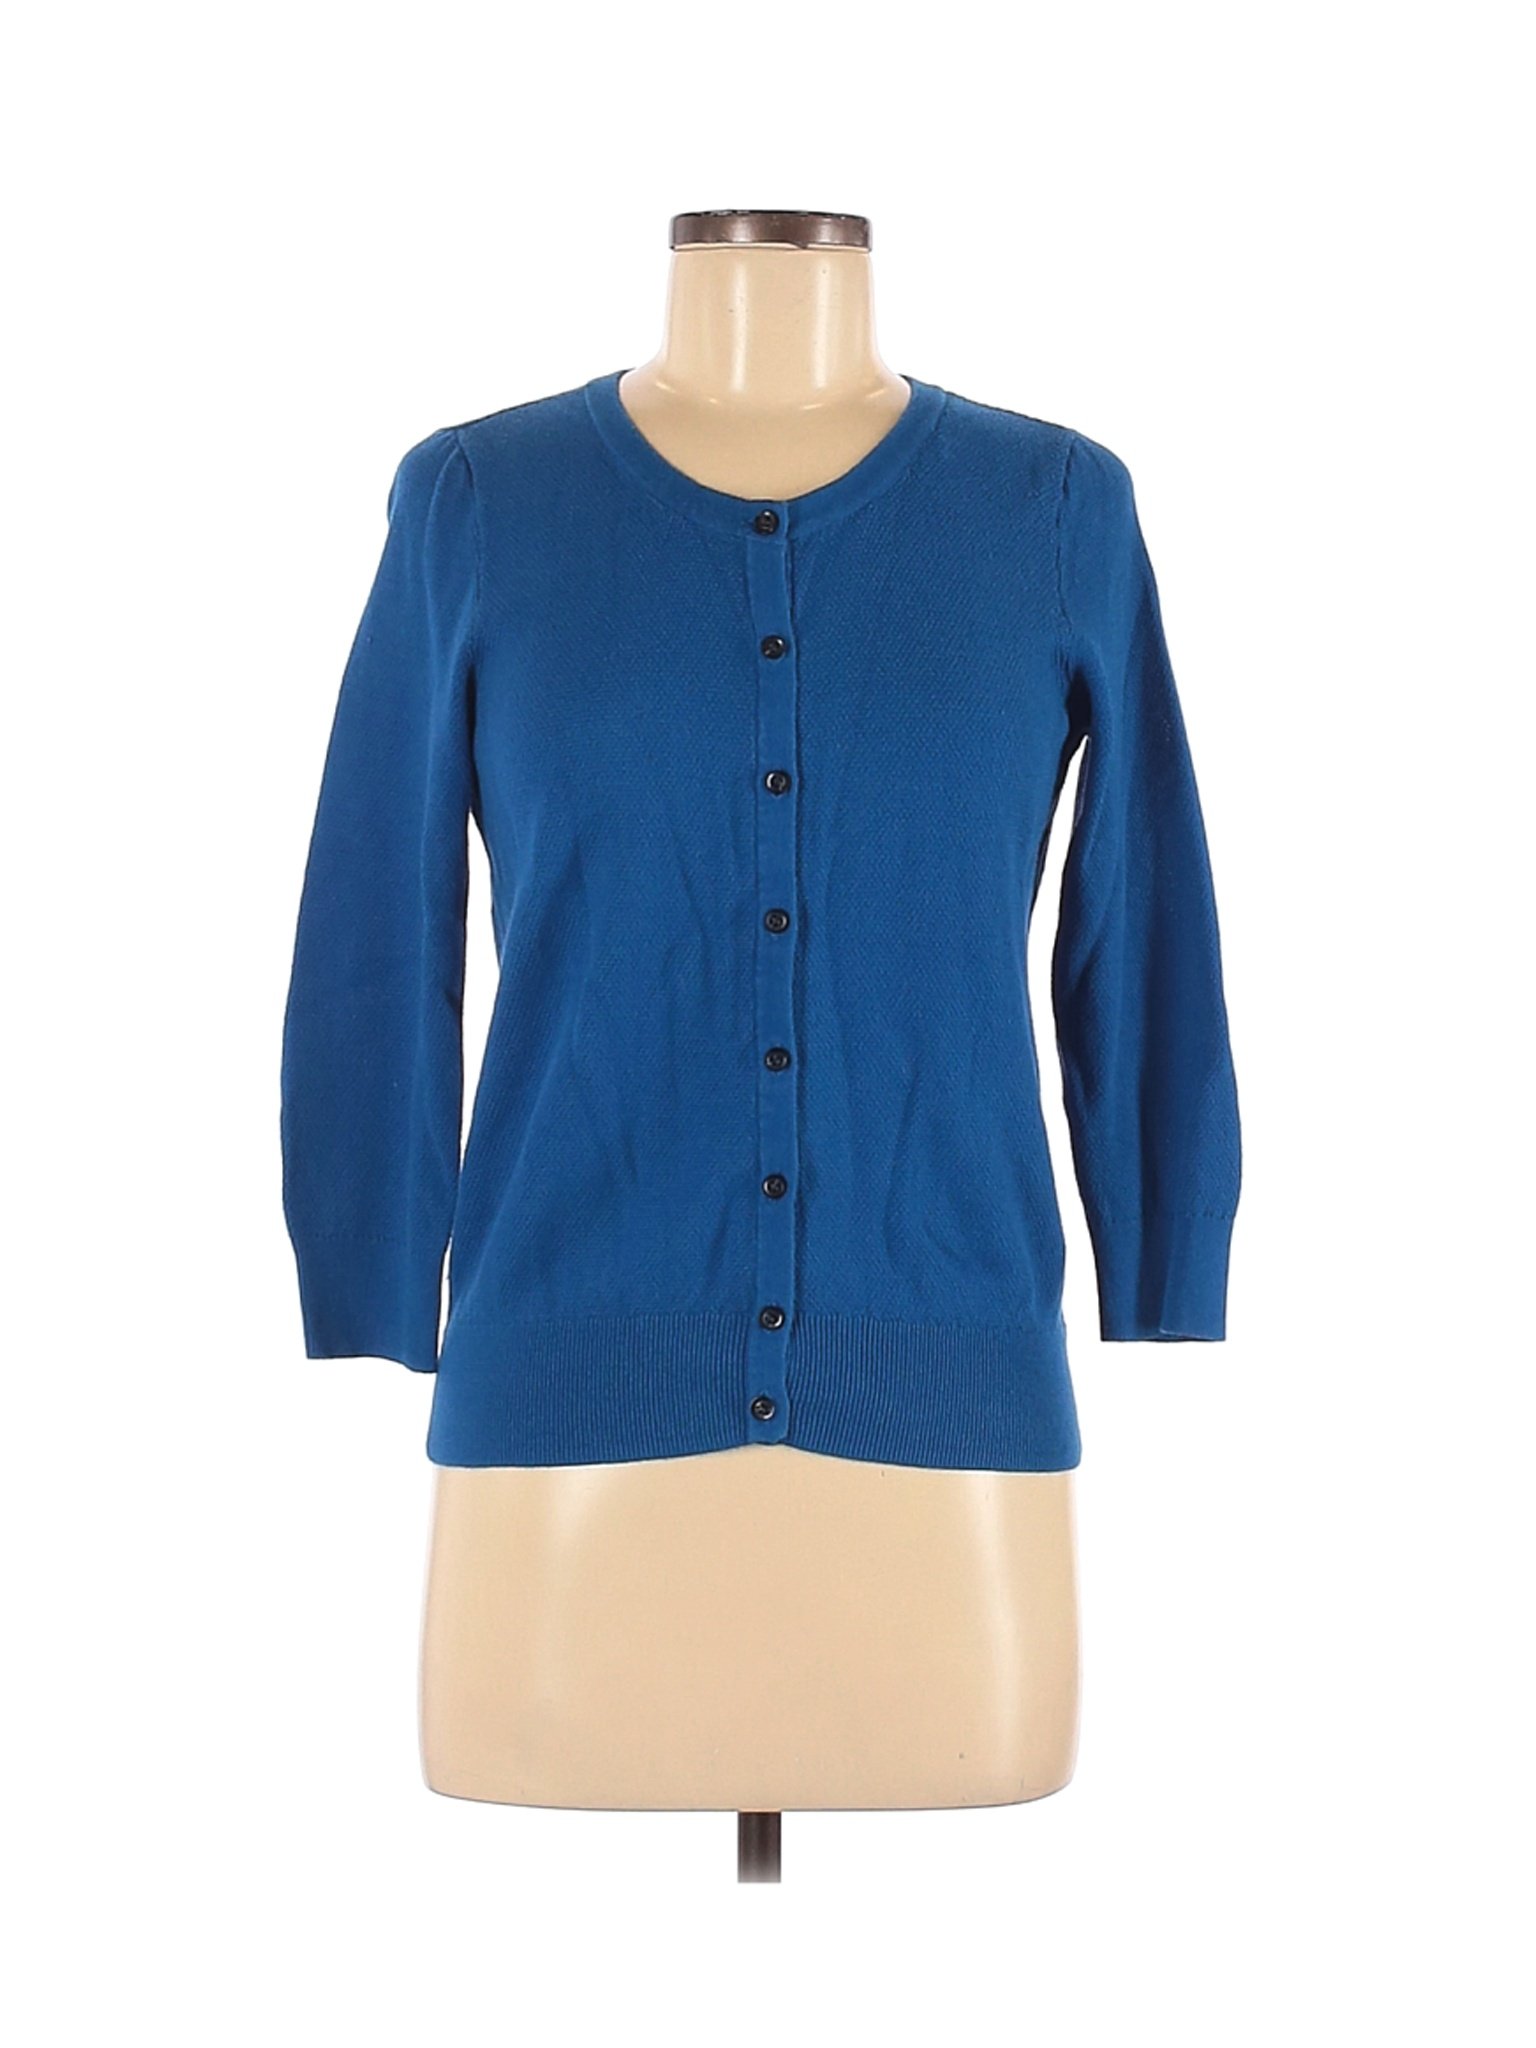 The Limited Women Blue Cardigan M | eBay